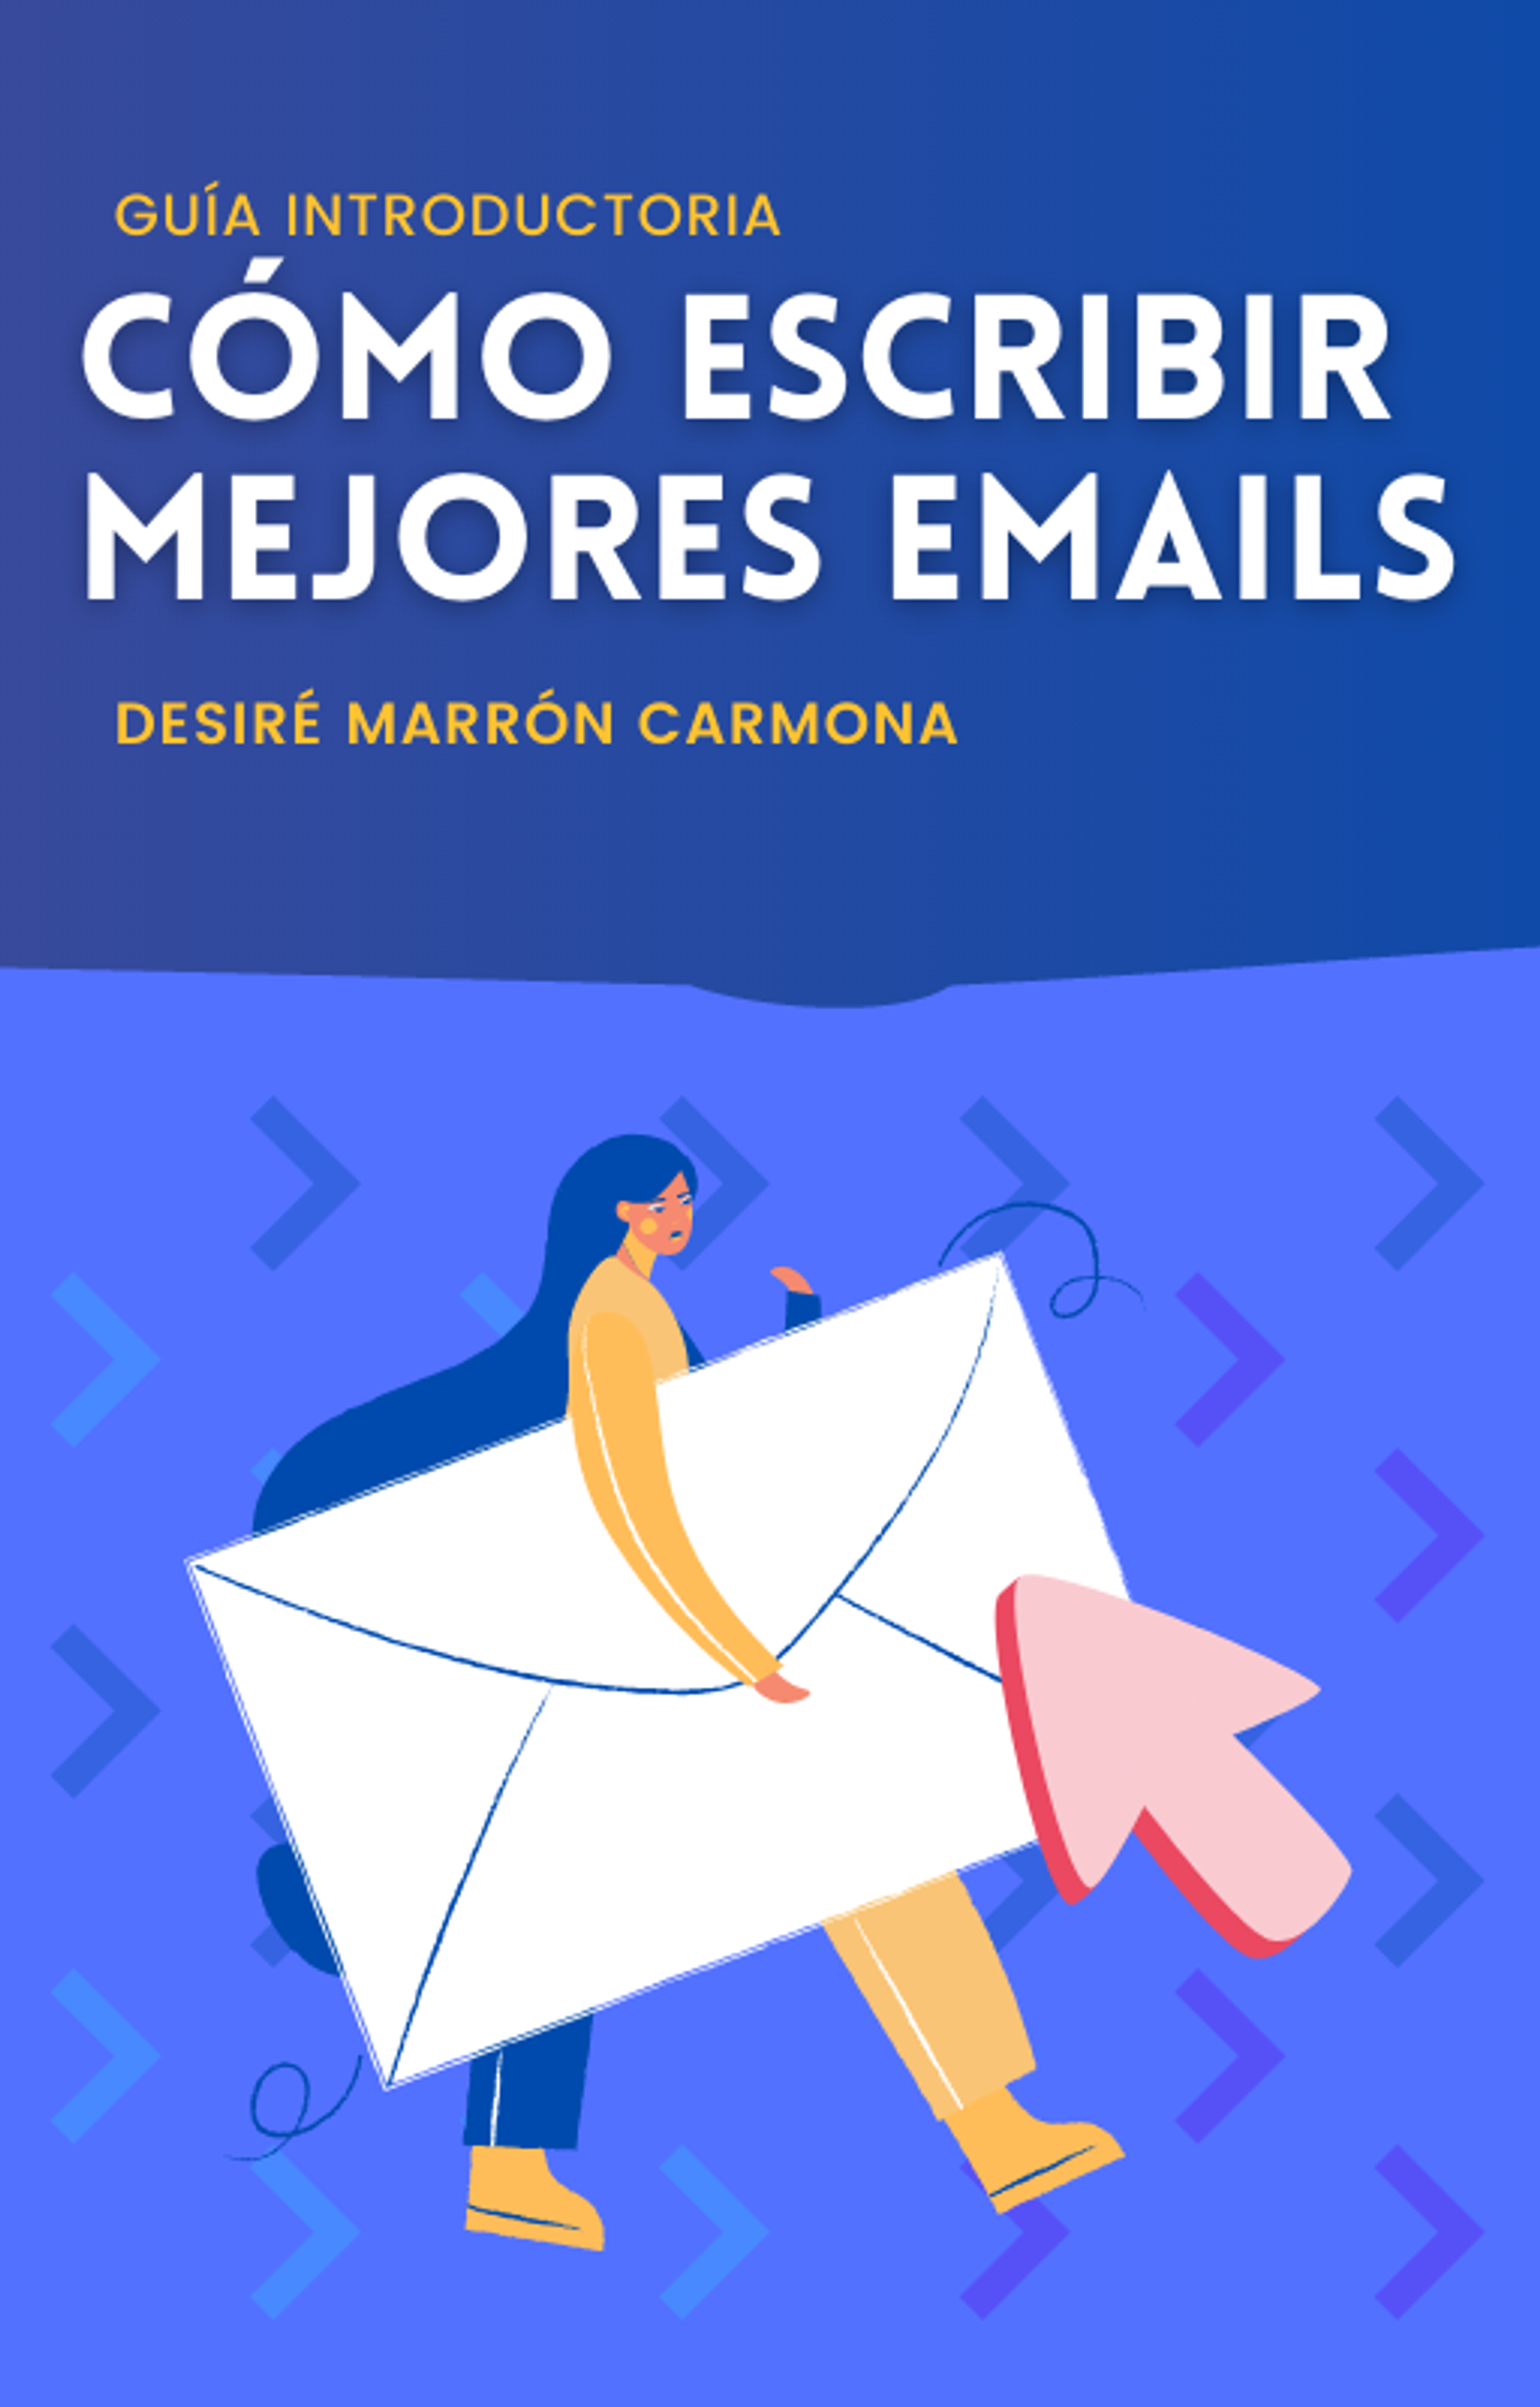 Cover for my book Cómo escribir mejores emails